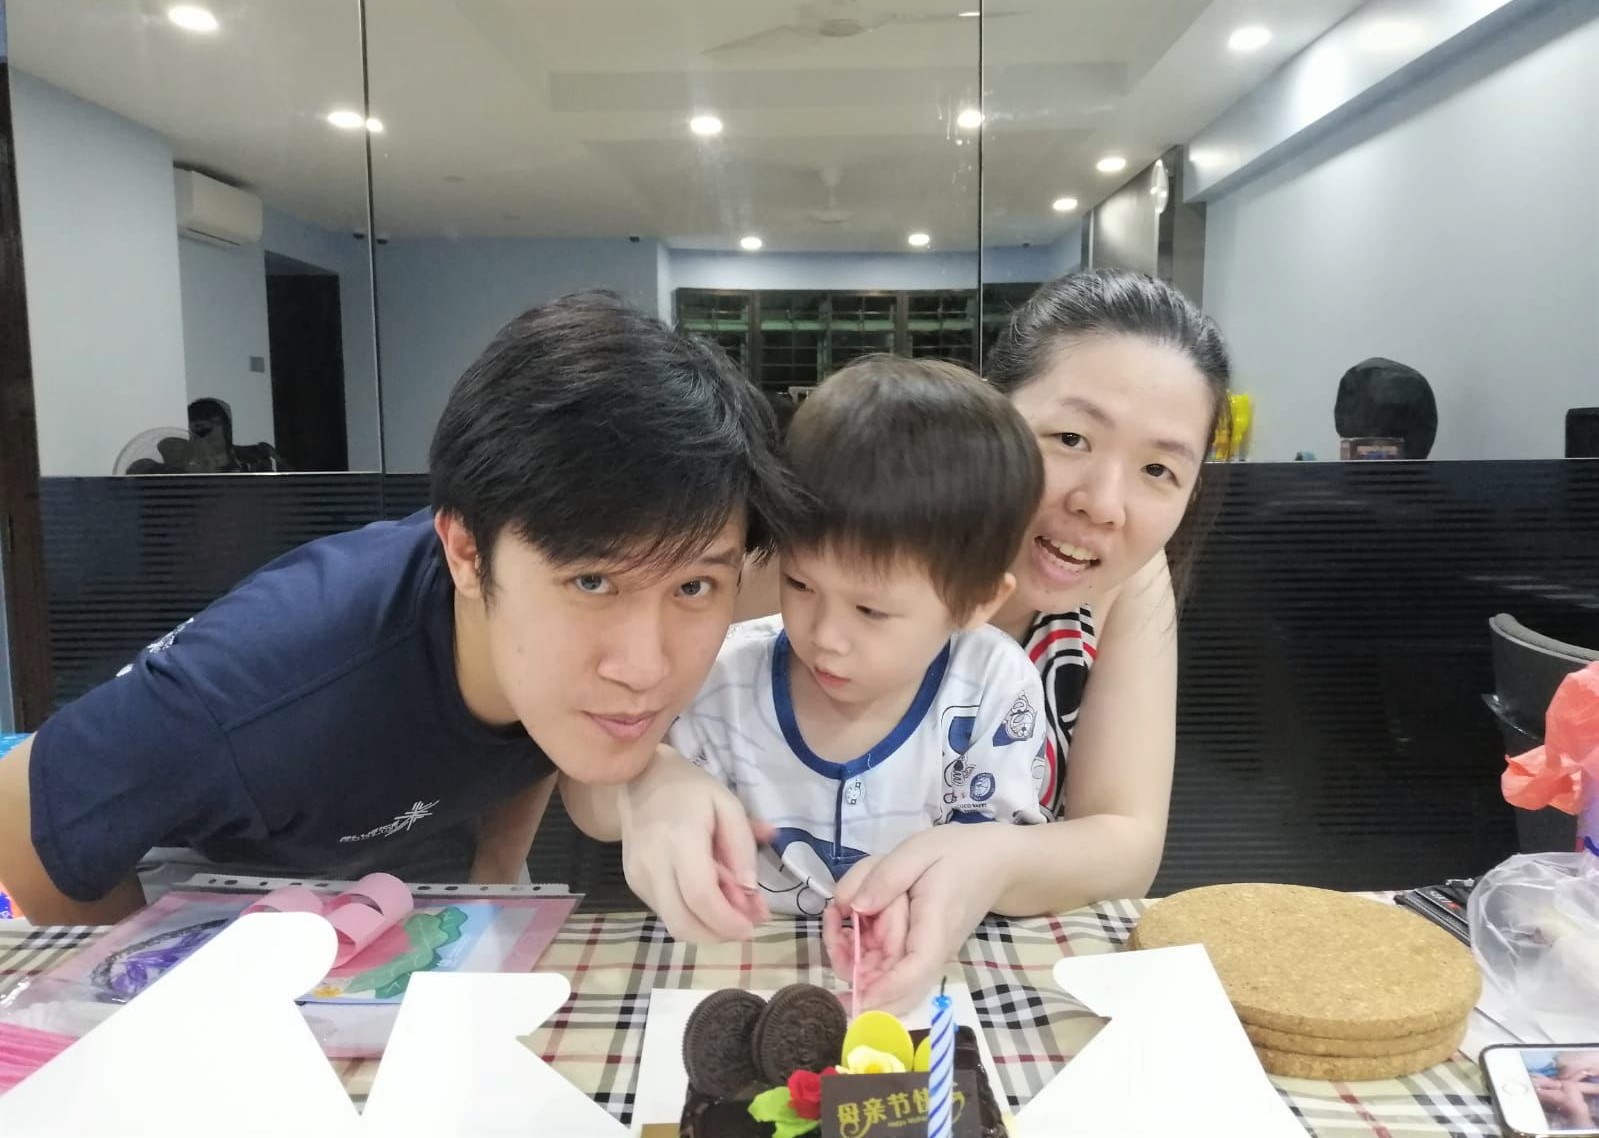 Loo Yee Chye with family